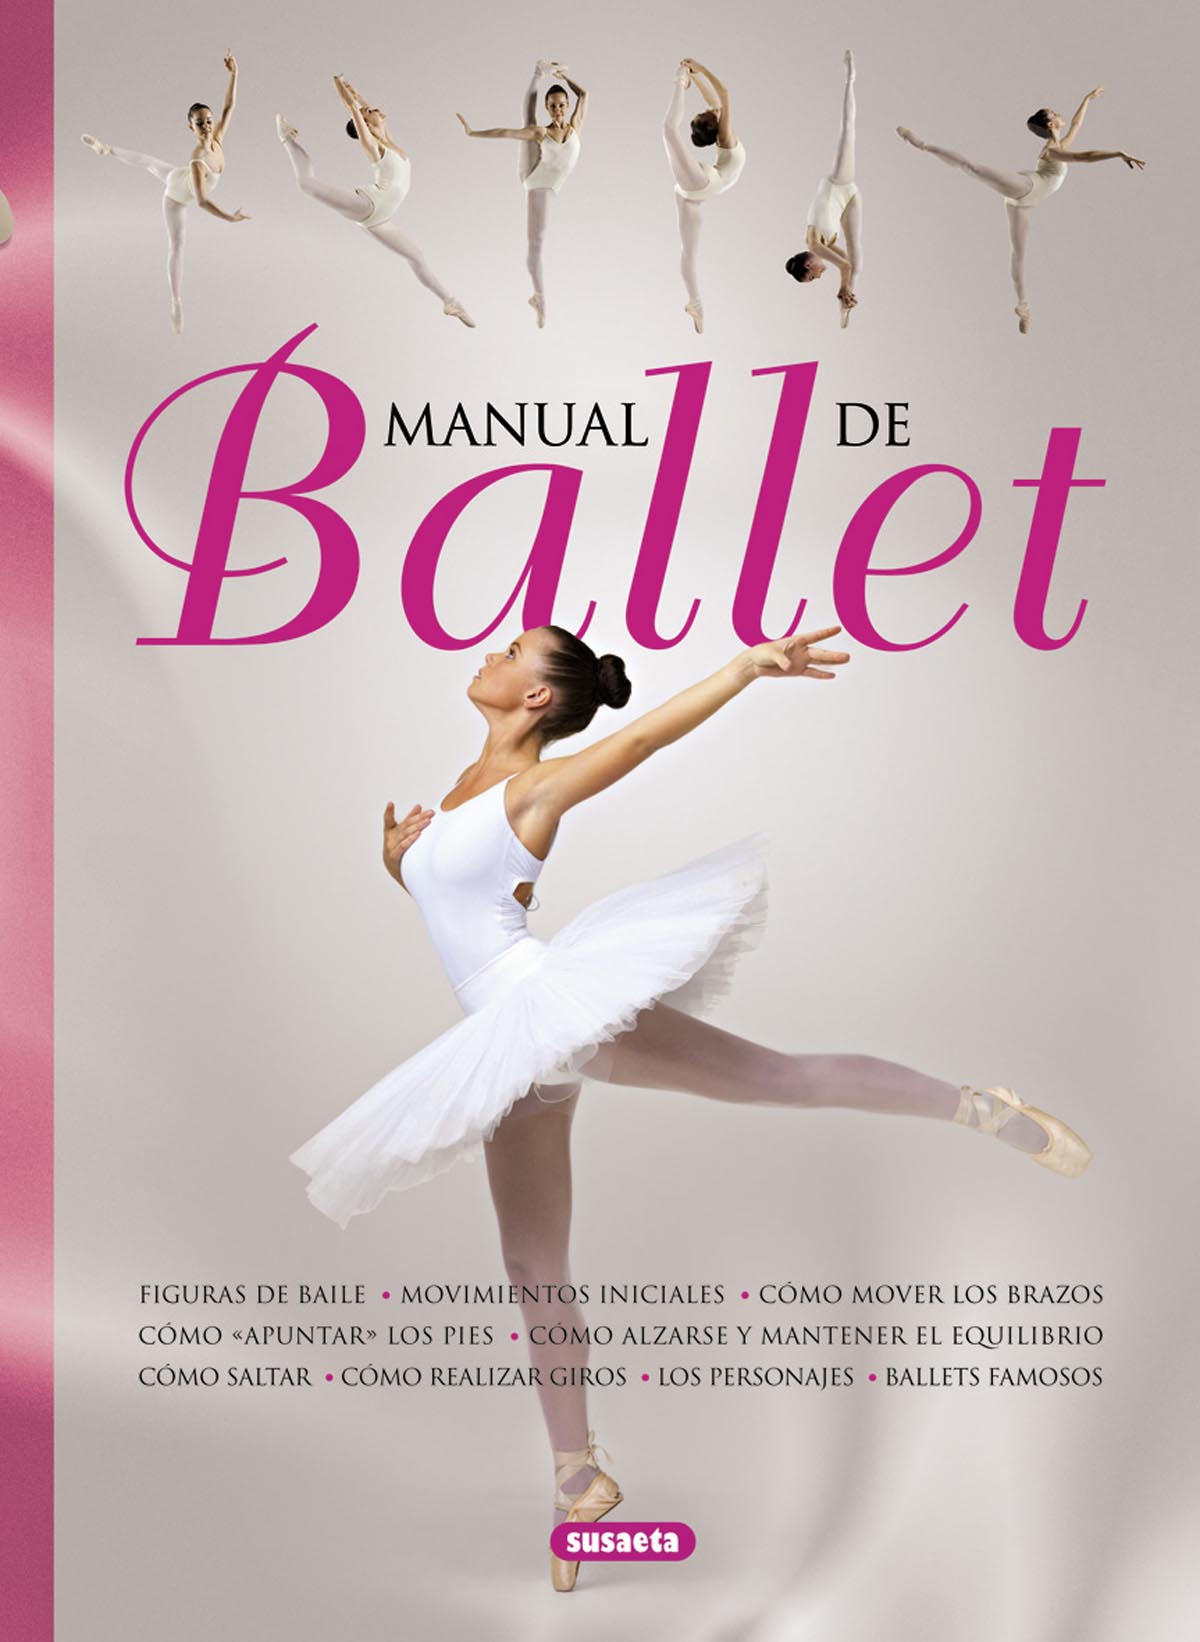 Manual de ballet :: Libelista